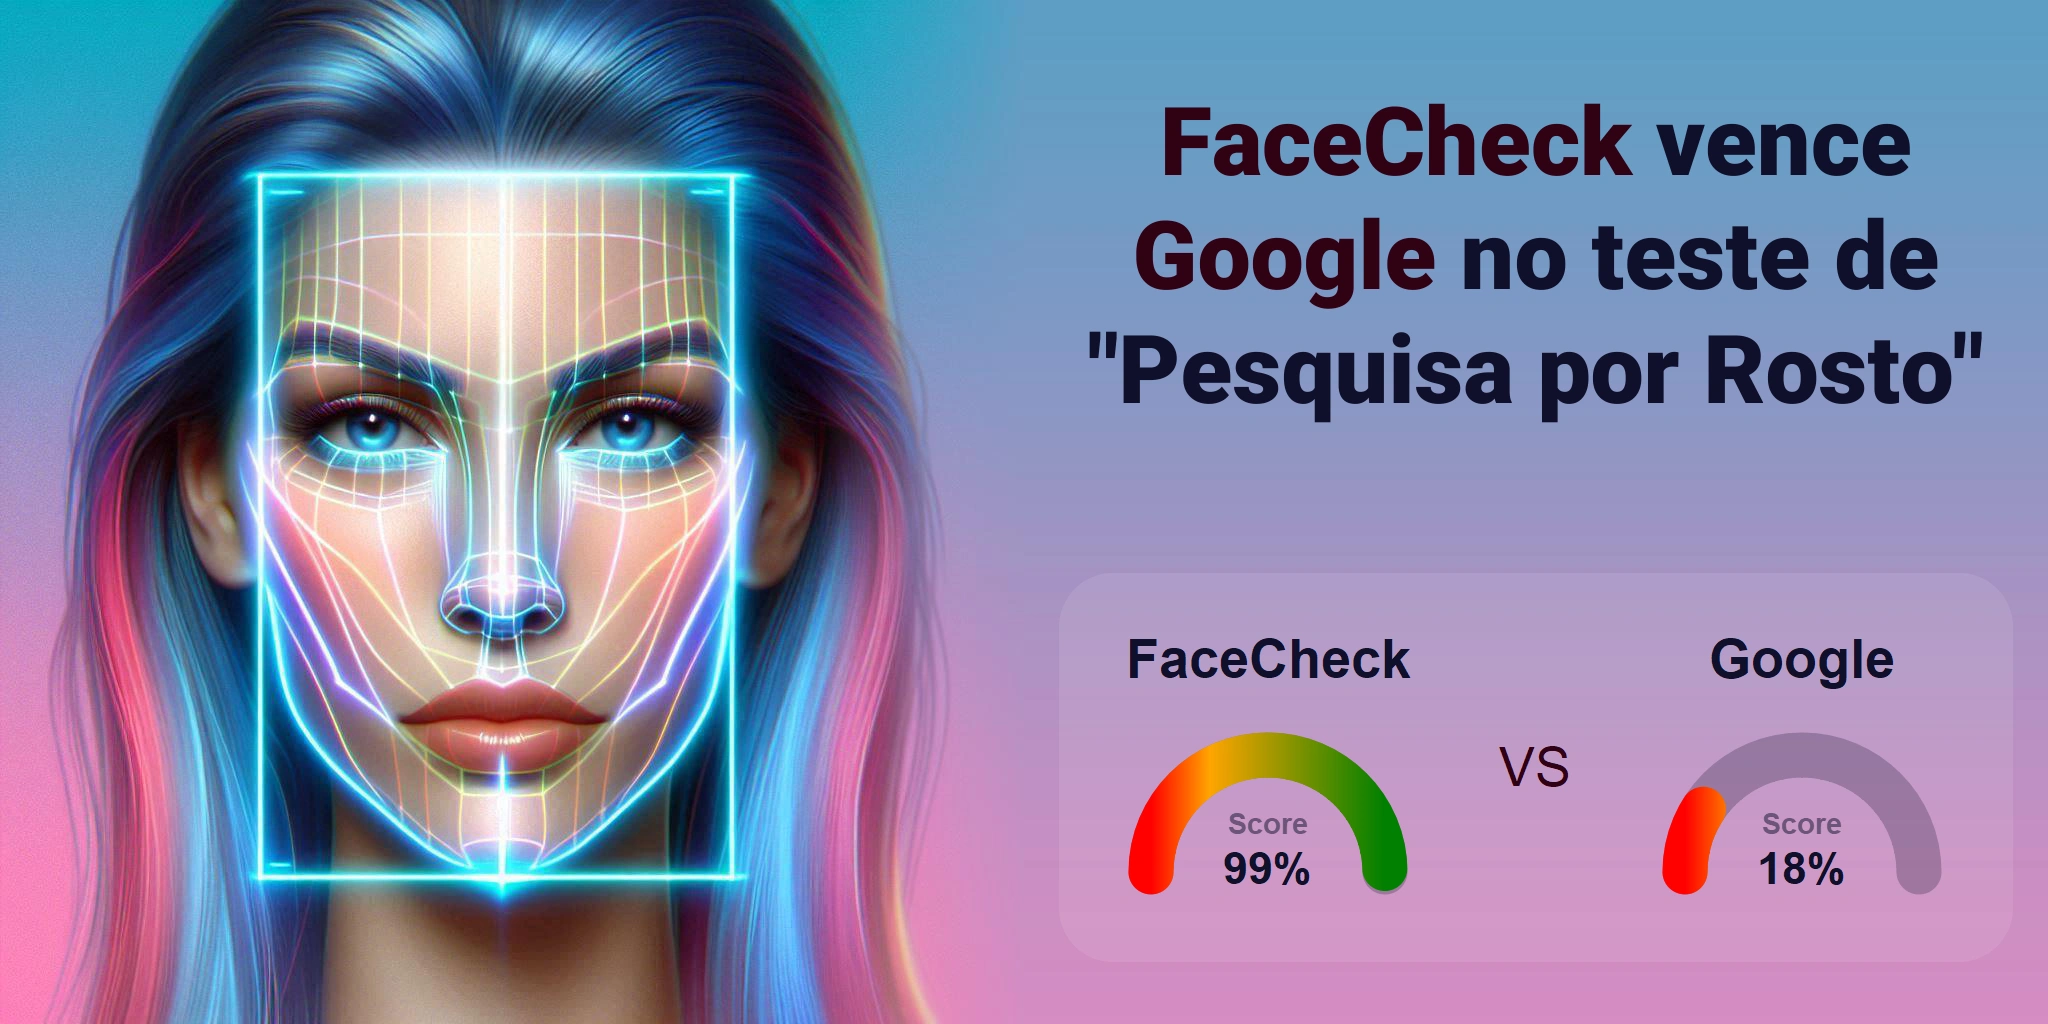 FaceCheck.ID vs Google.com